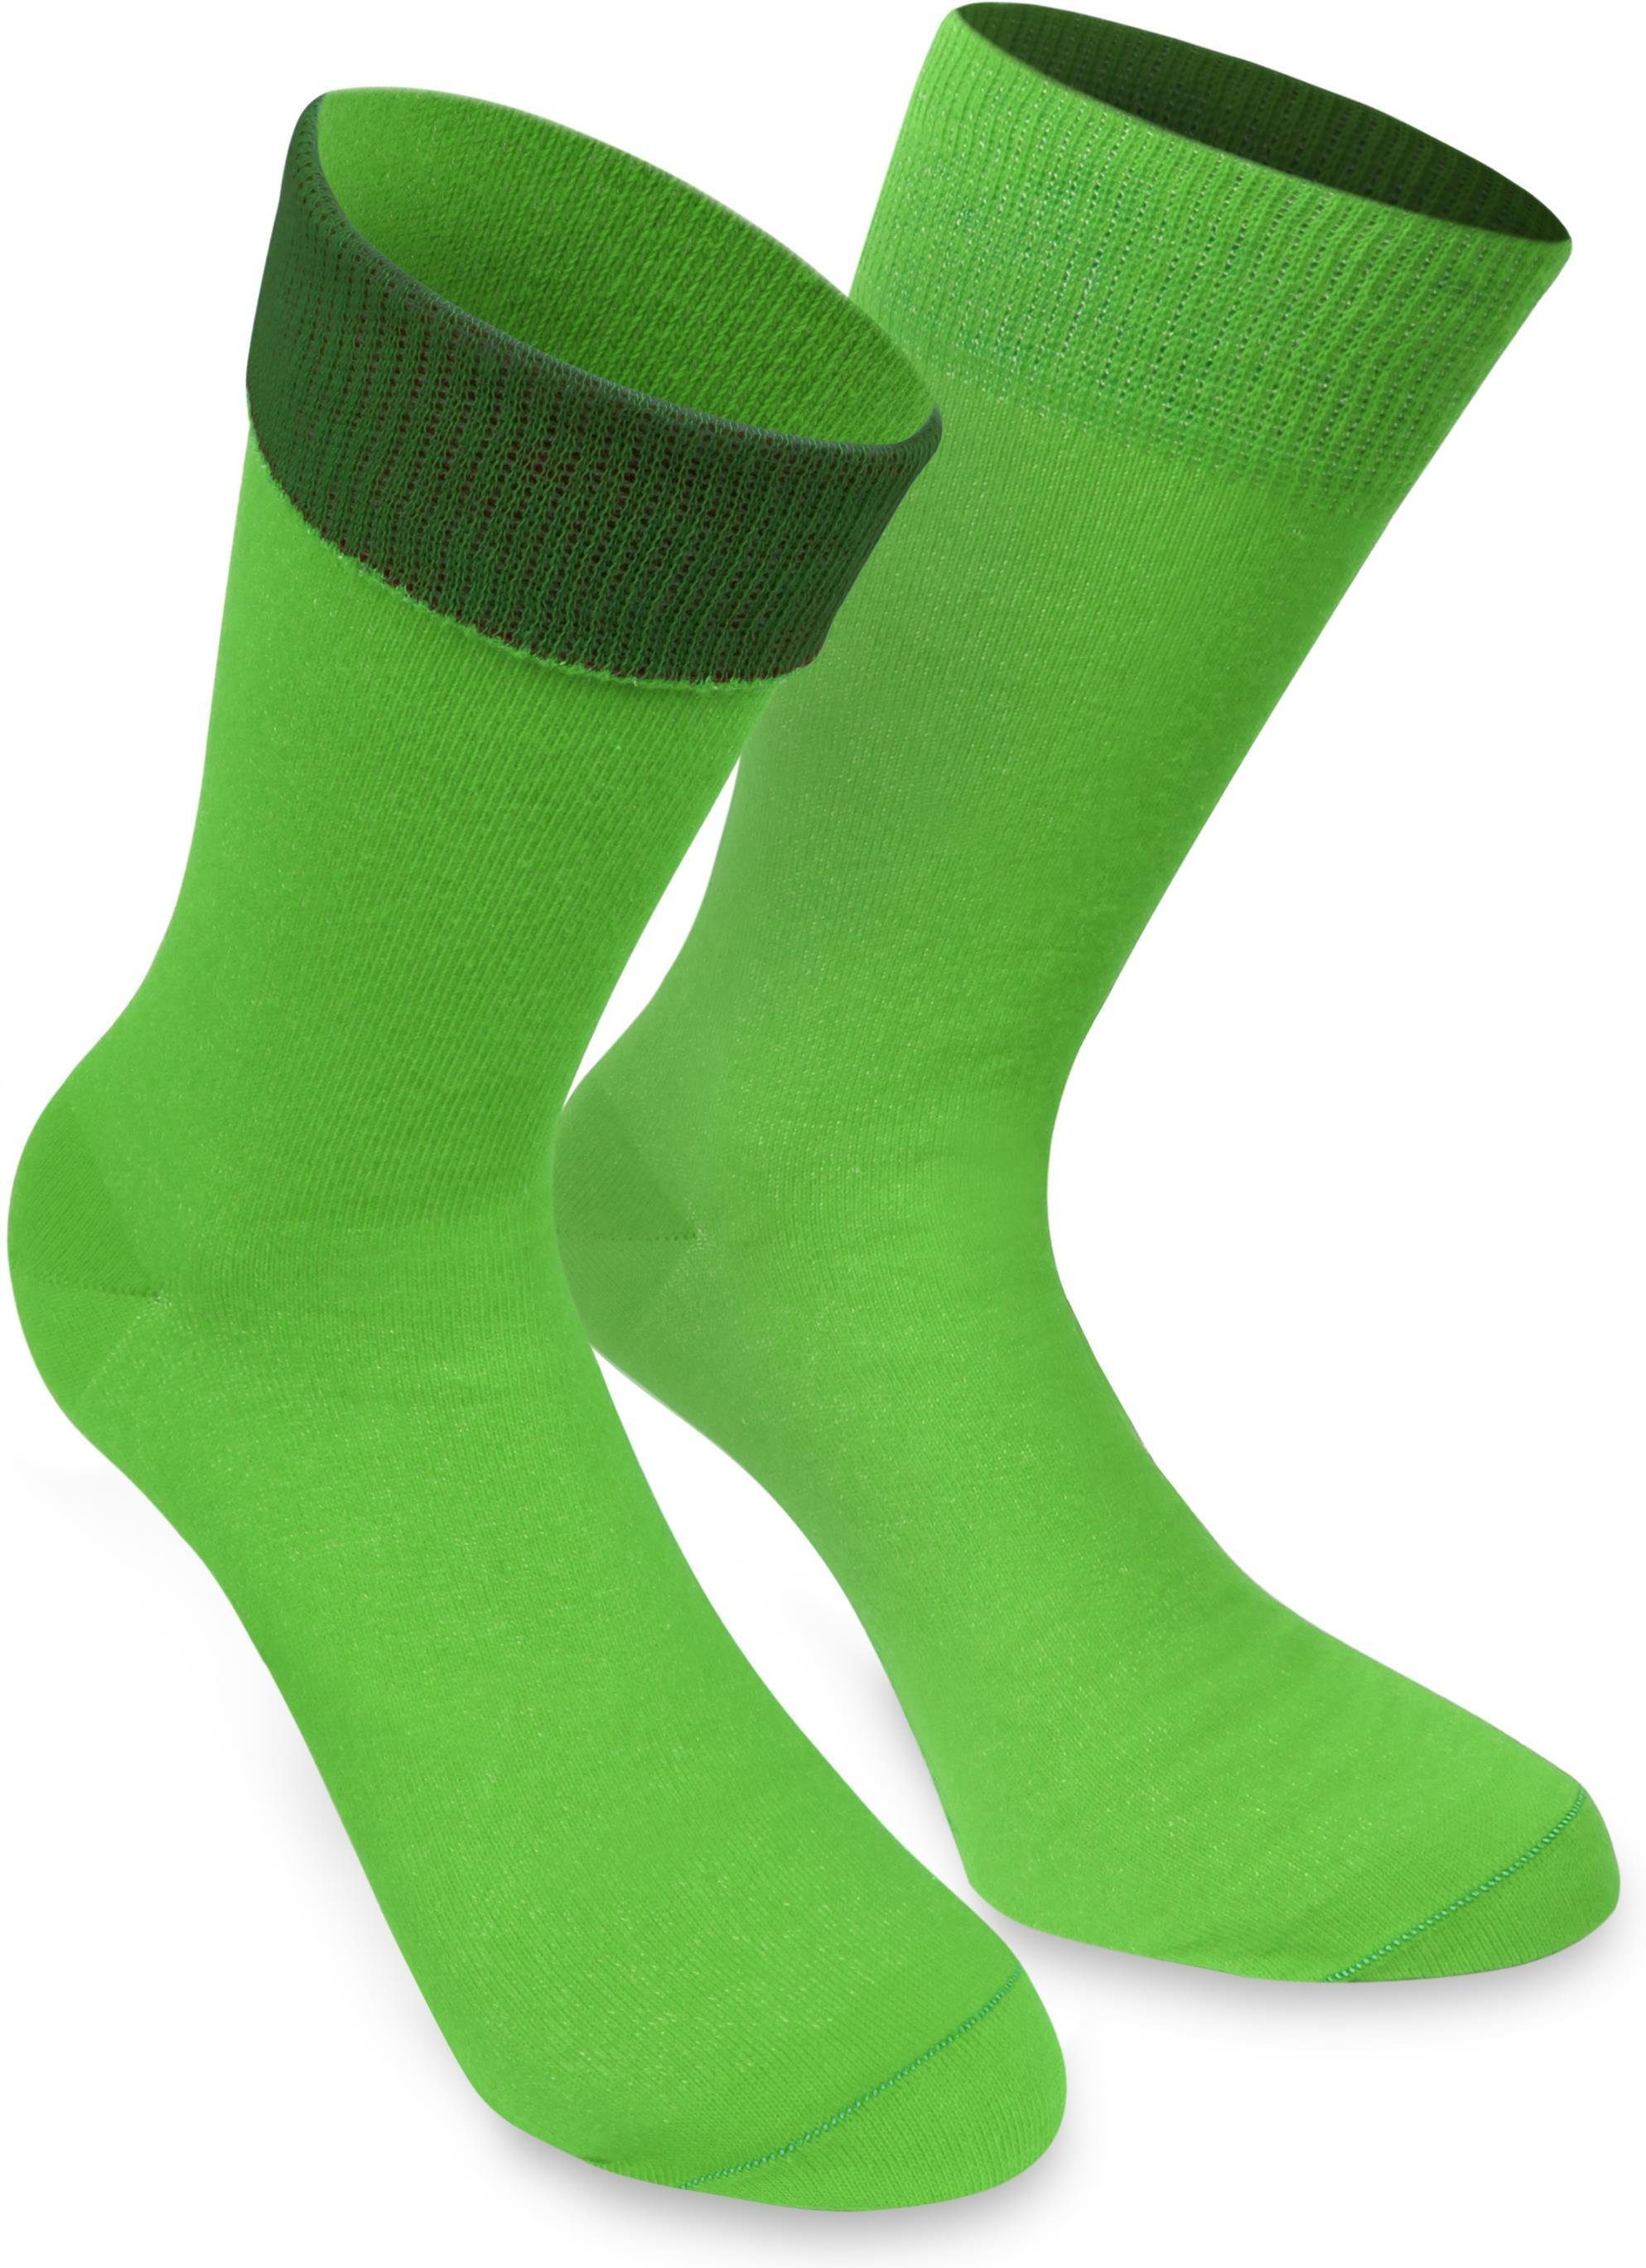 Socken Paar (1 normani Bund abgesetzter Paar) 1 farbig Apfelgrün/Moosgrün Bi-Color Basicsocken